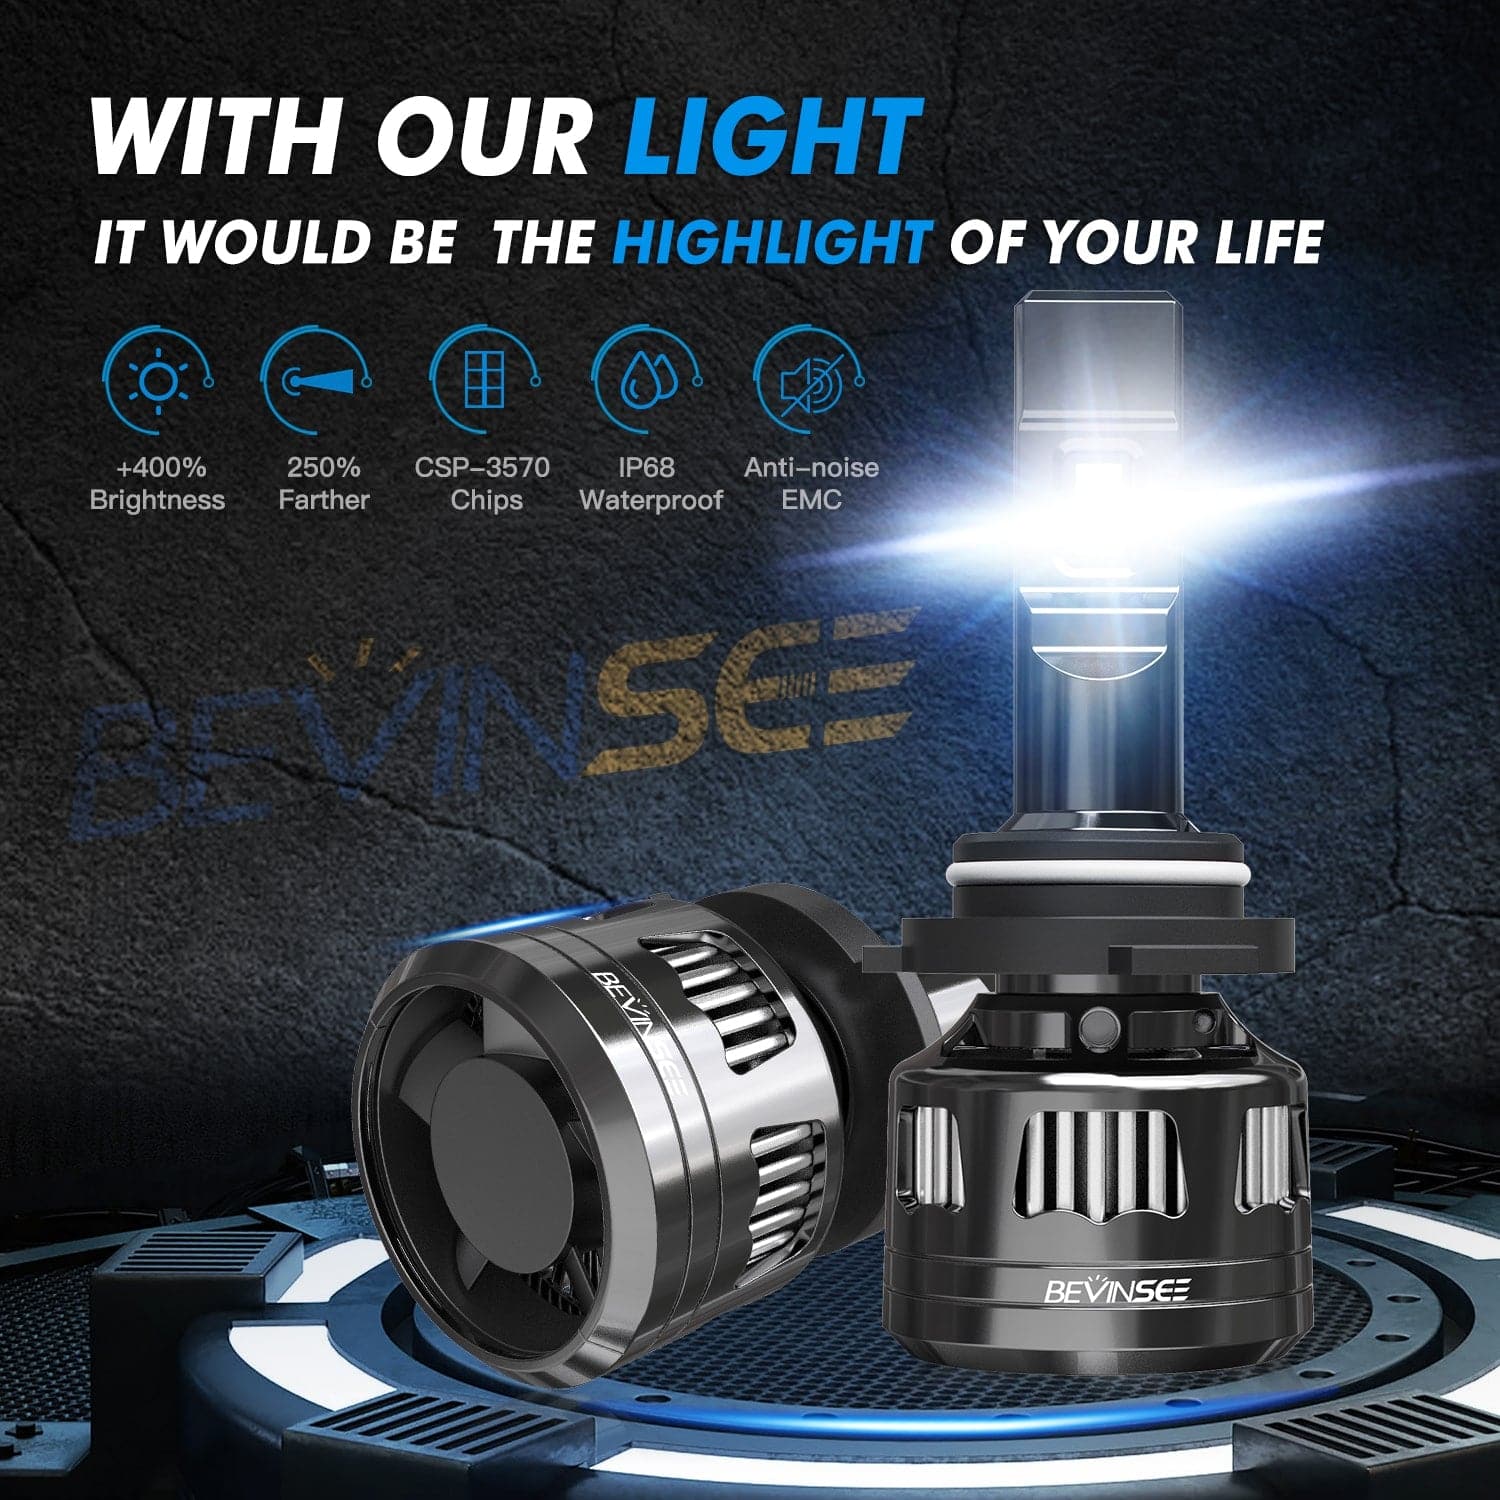 V45 9005/HB3 Super Bright LED Headlight 6000K